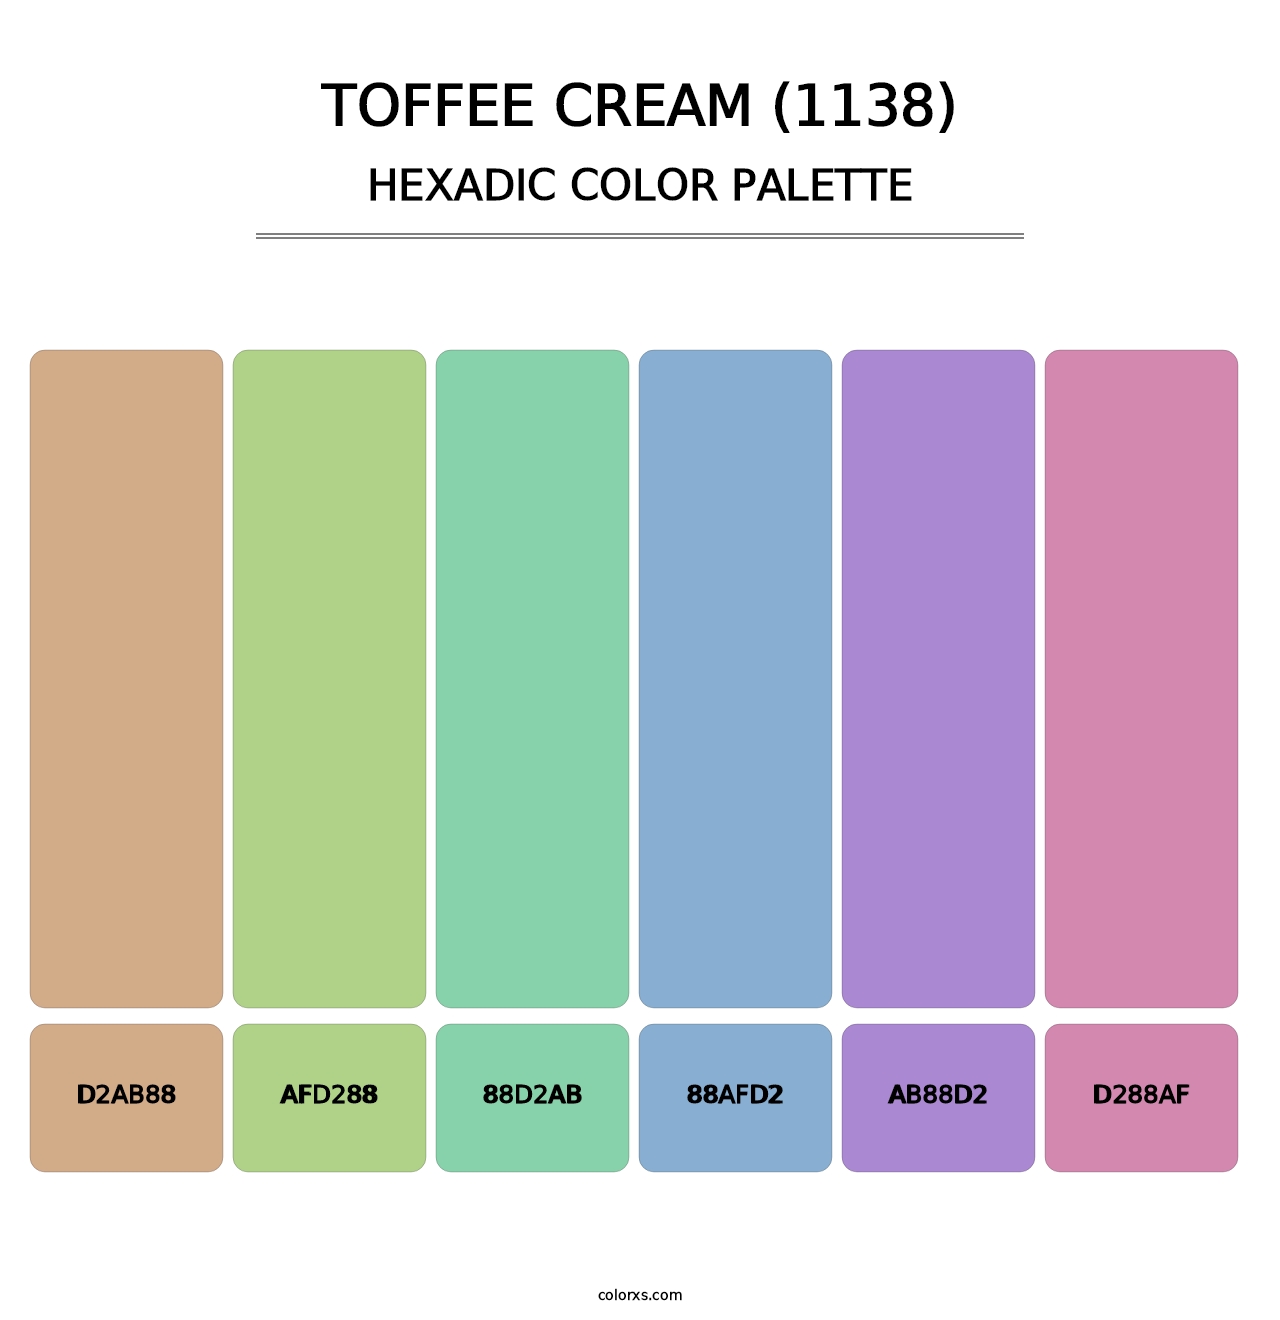 Toffee Cream (1138) - Hexadic Color Palette